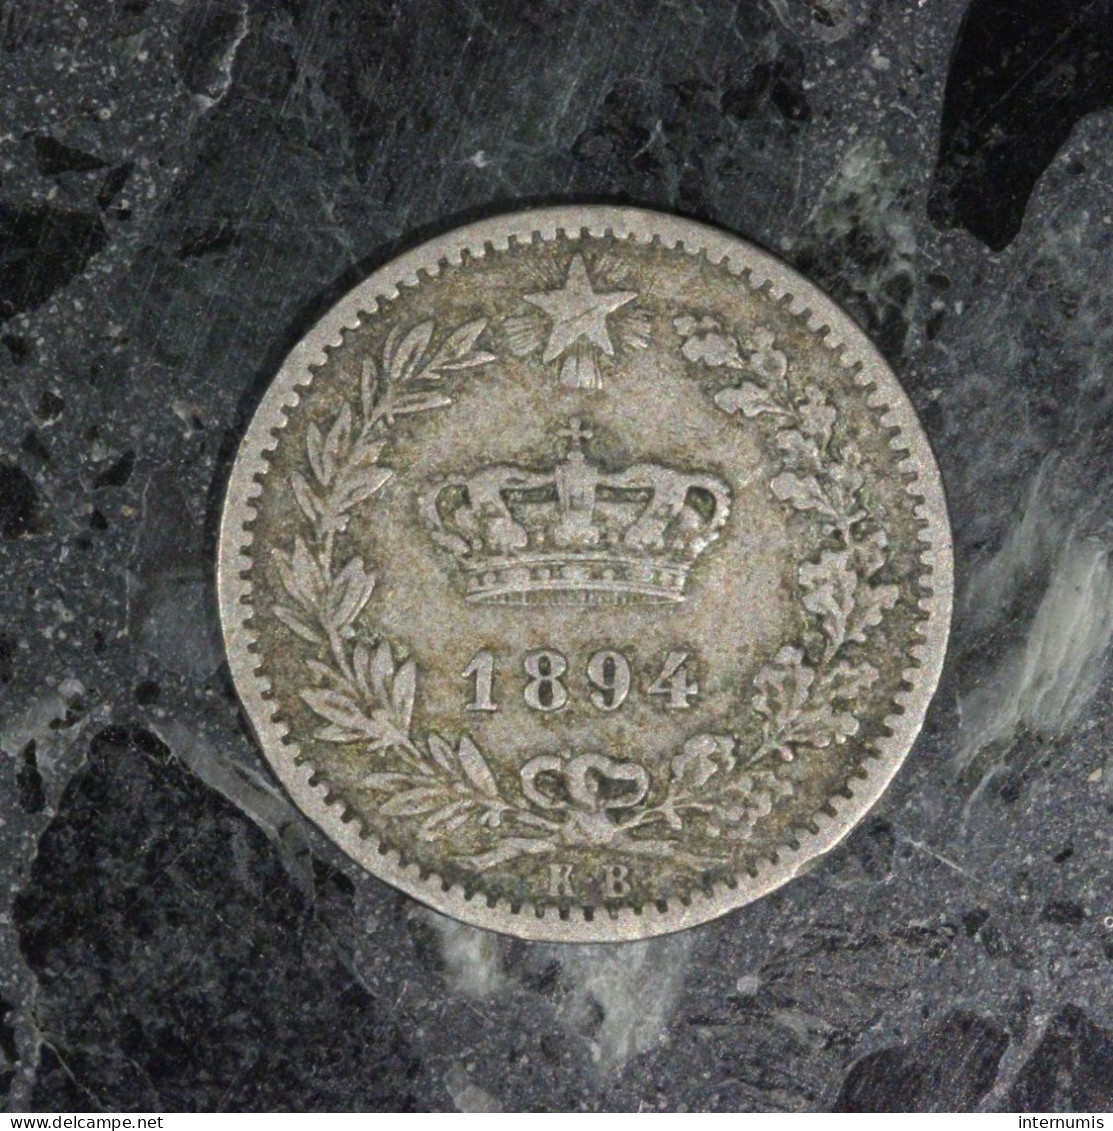  Italie / Italy, Umberto I, 20 Centesimi, 1894, Berlin, Cu-N (Copper-Nickel), TTB (EF),
KM#28.1 - 1878-1900 : Umberto I.